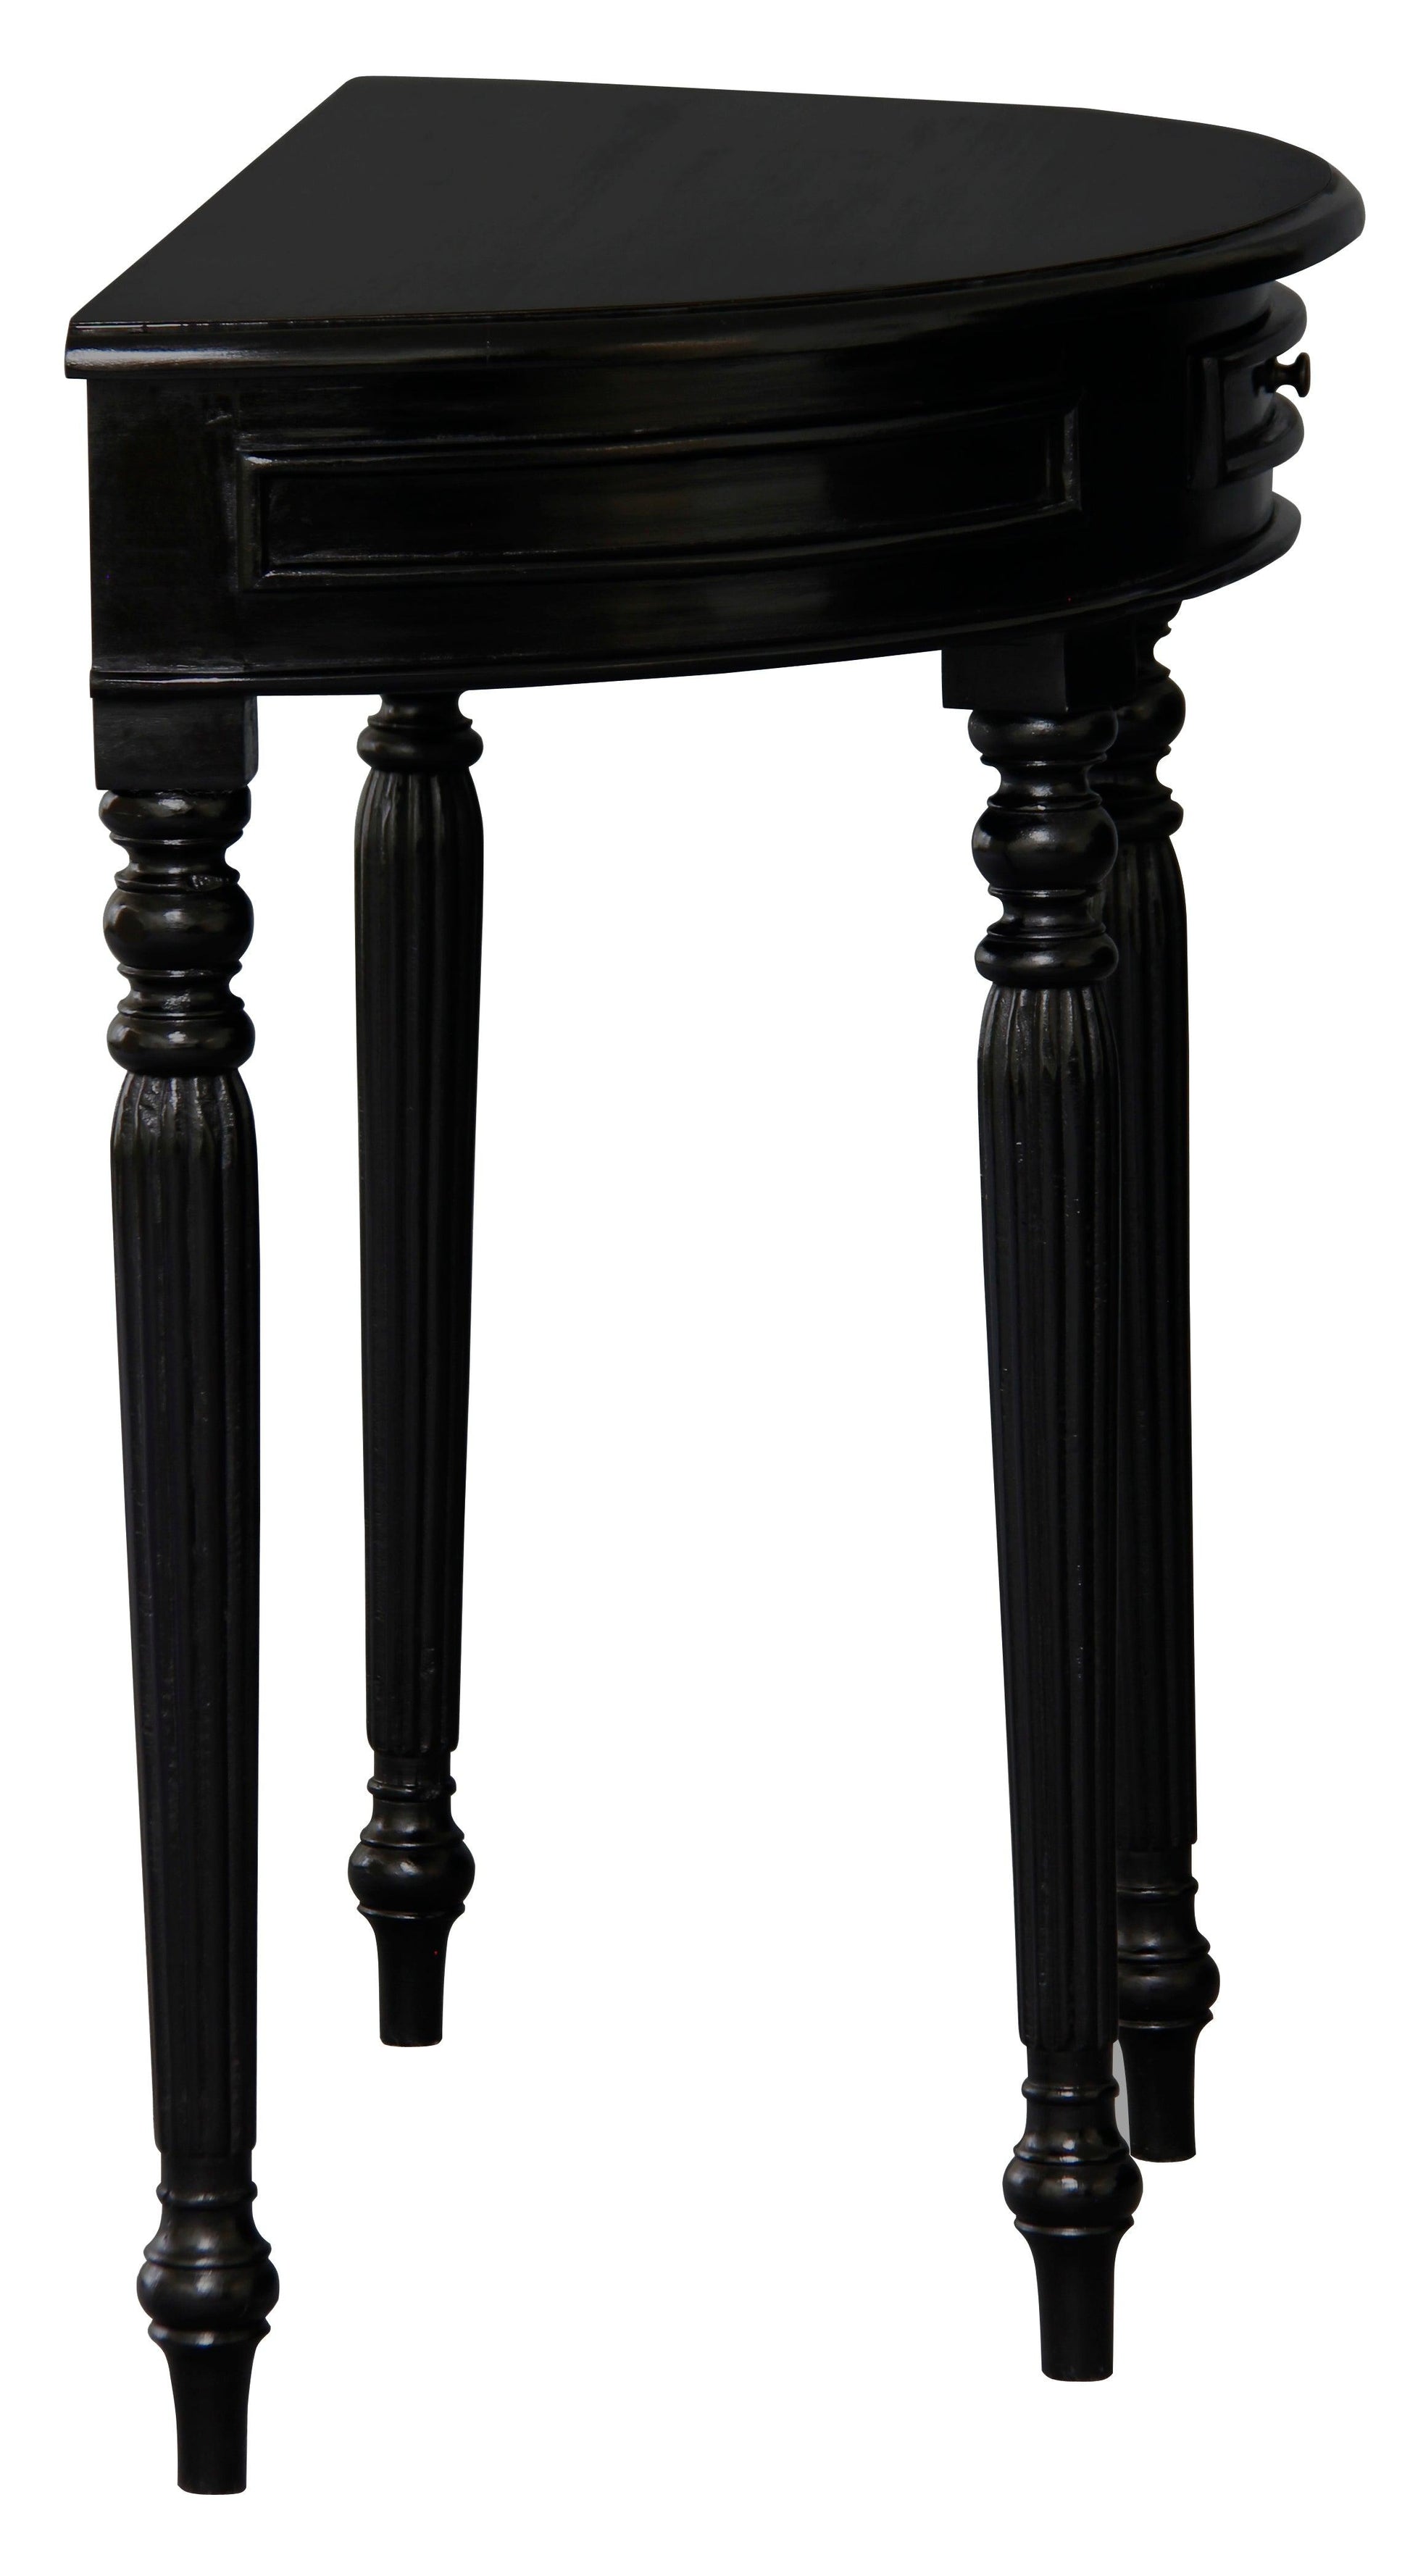 Huntley Turn Leg Half Round Sofa Table (Black) - TableT 28 (B)754169490942 4